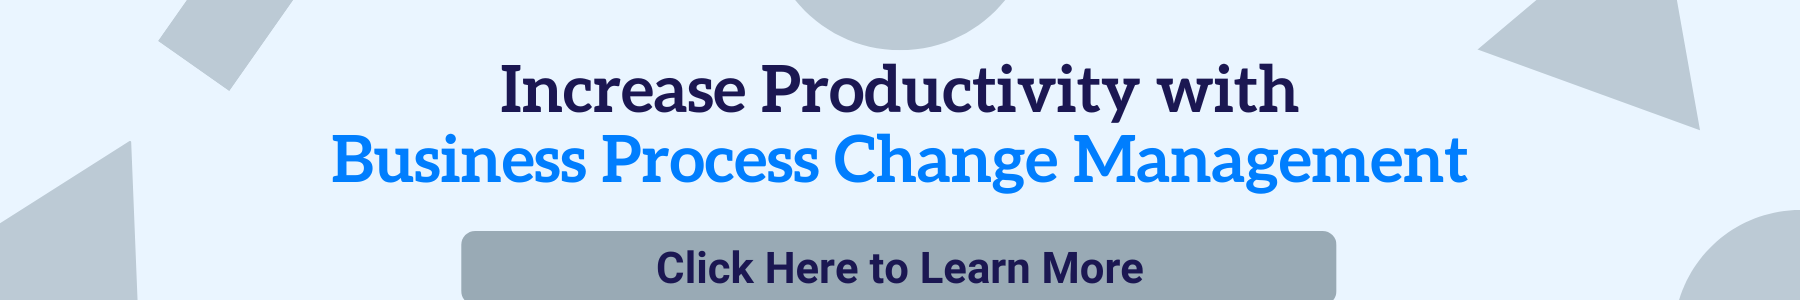 Business Process Change Management